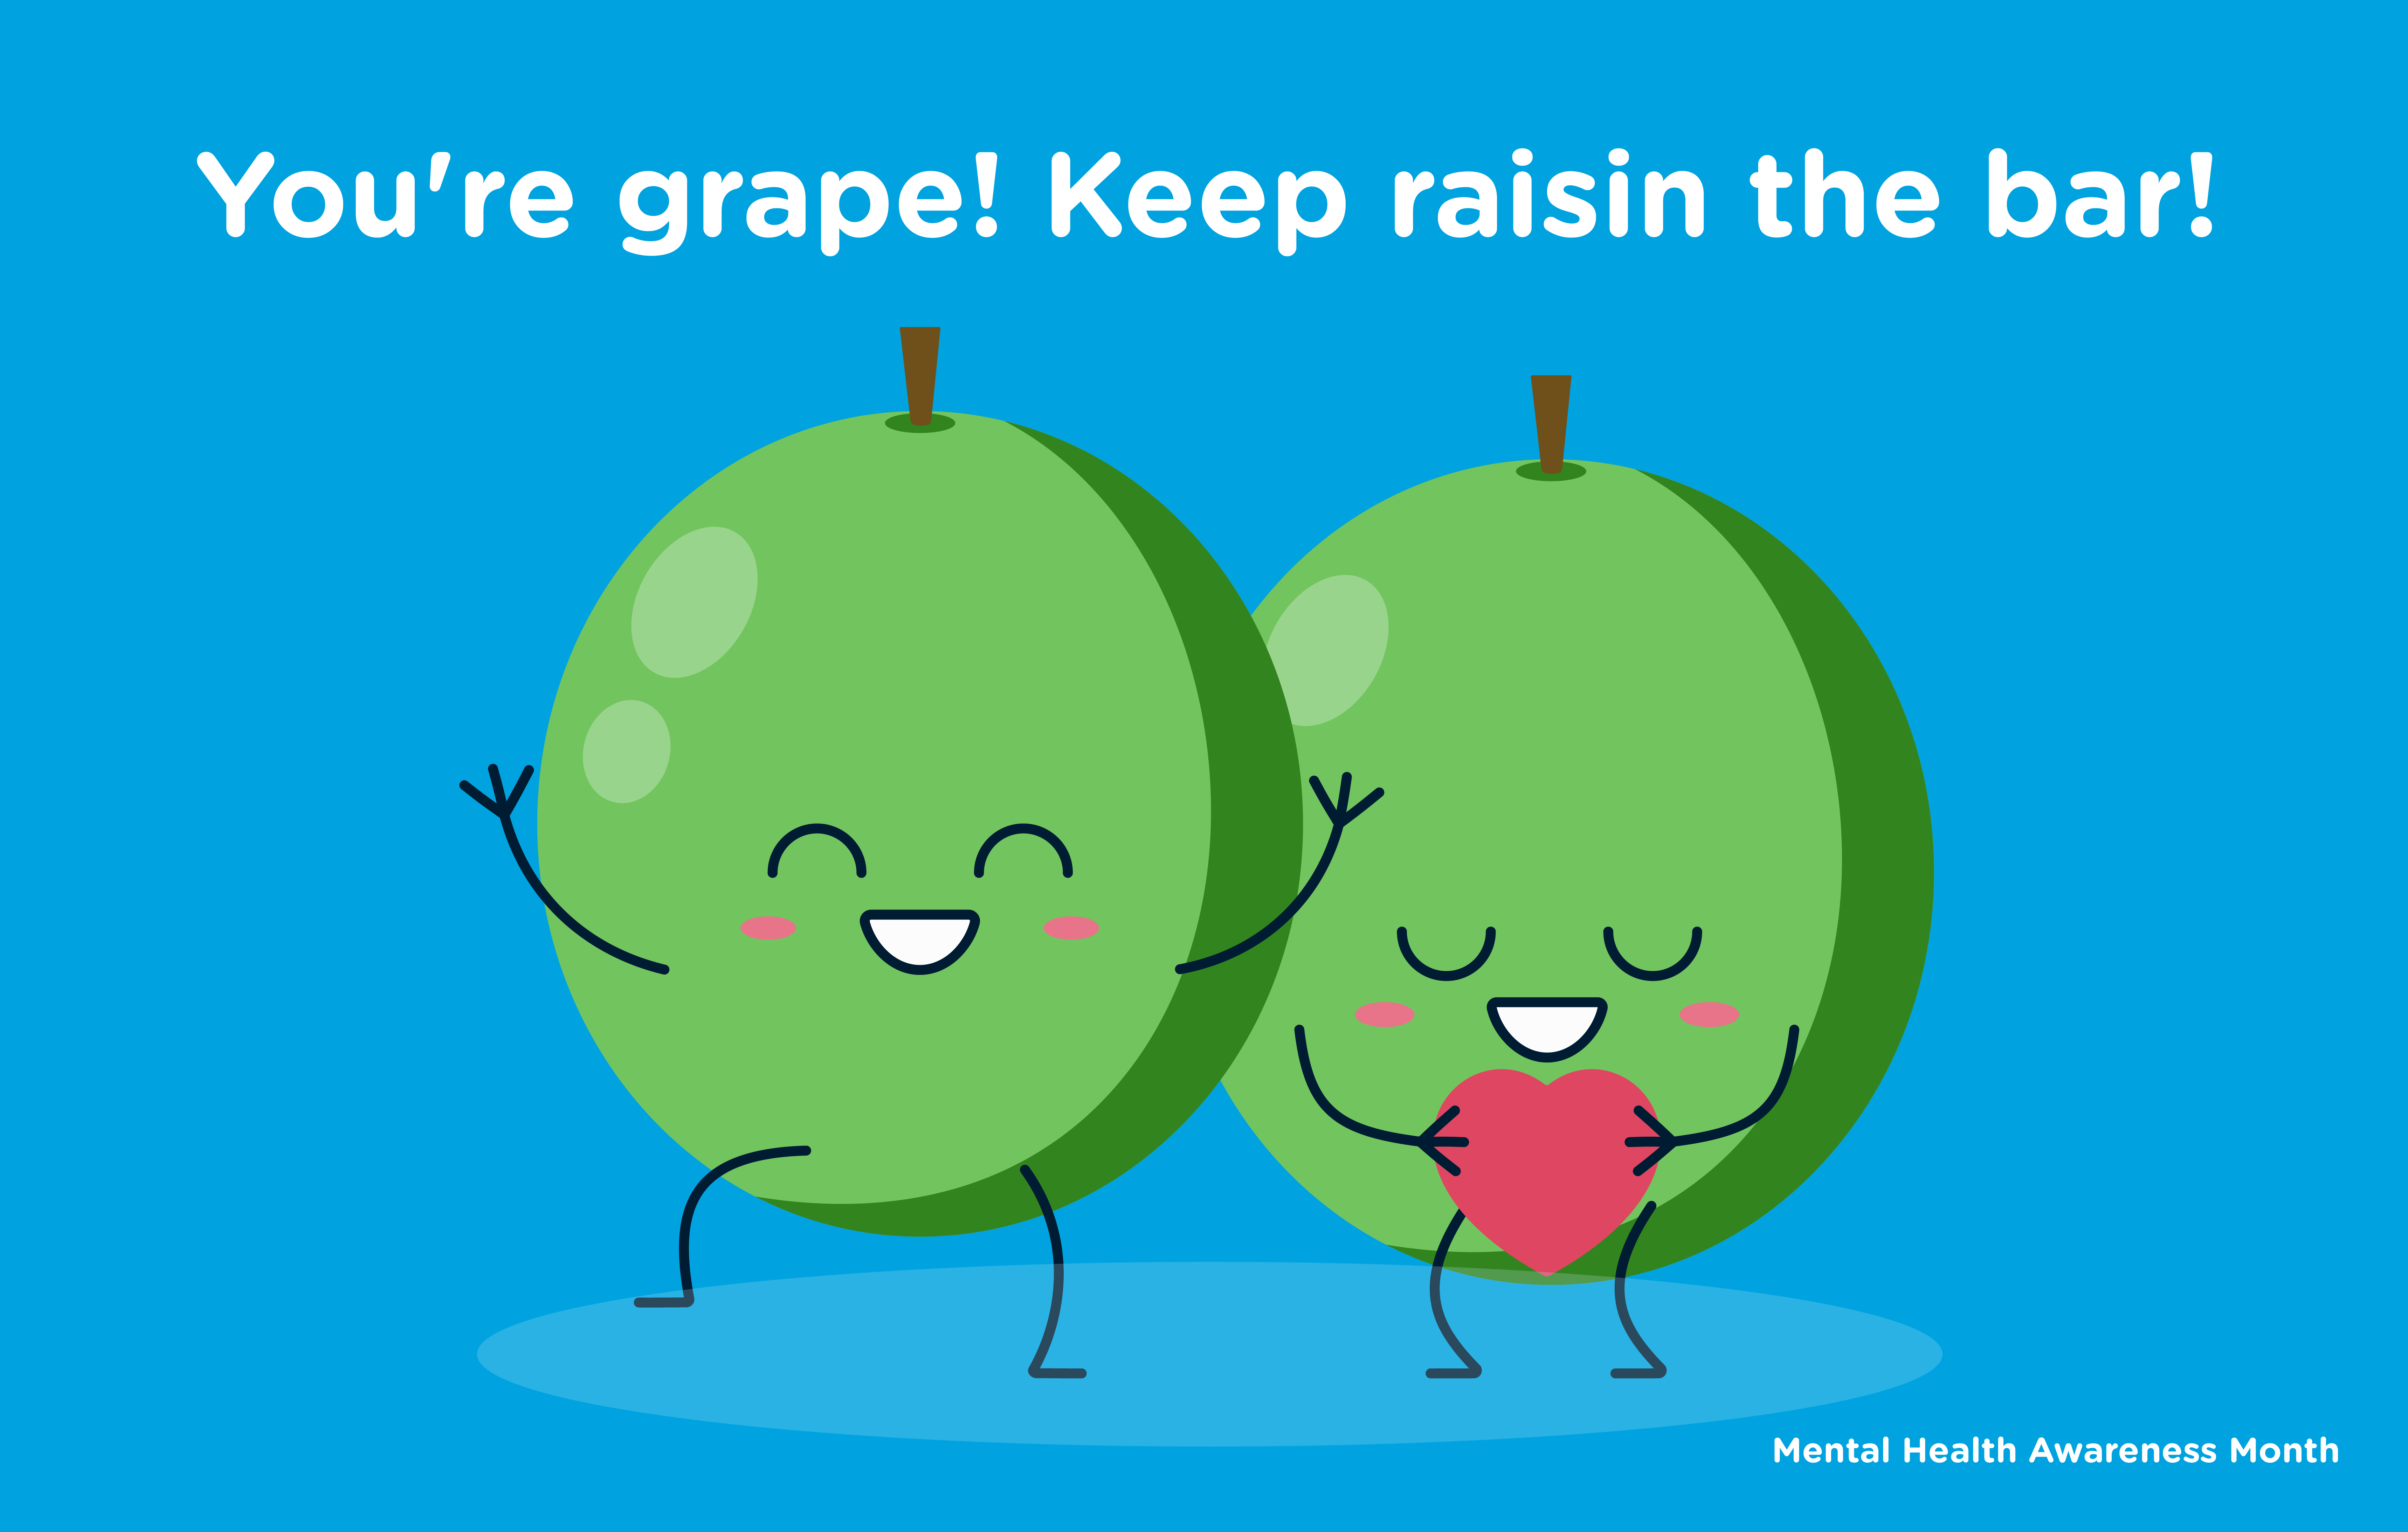 Mental Health Awareness Month: You're grape! Keep raisin the bar!